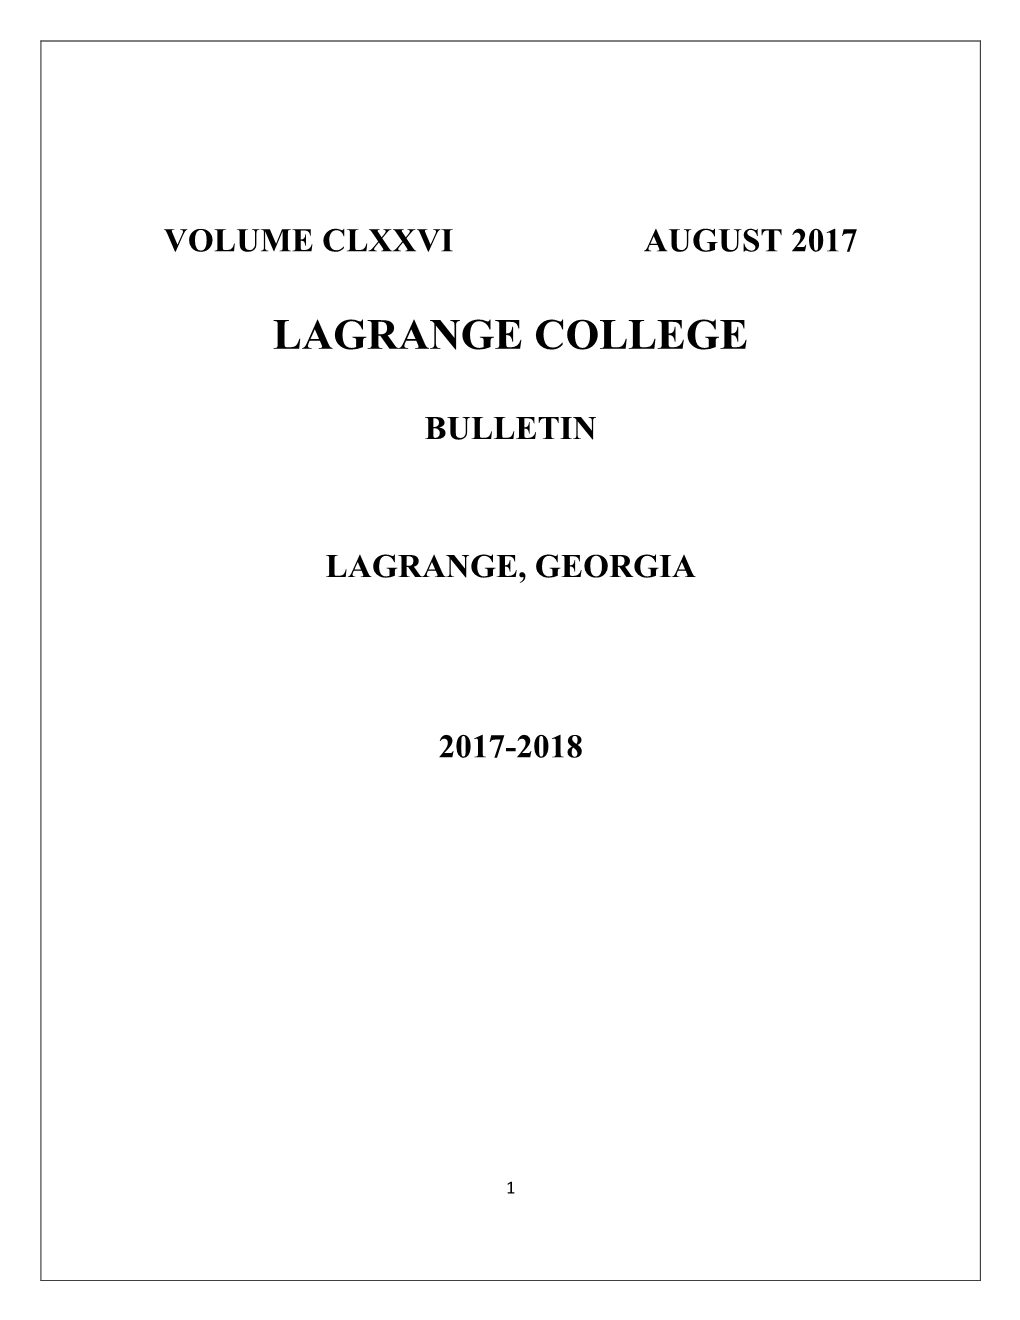 2017-2018 Lagrange College Bulletin